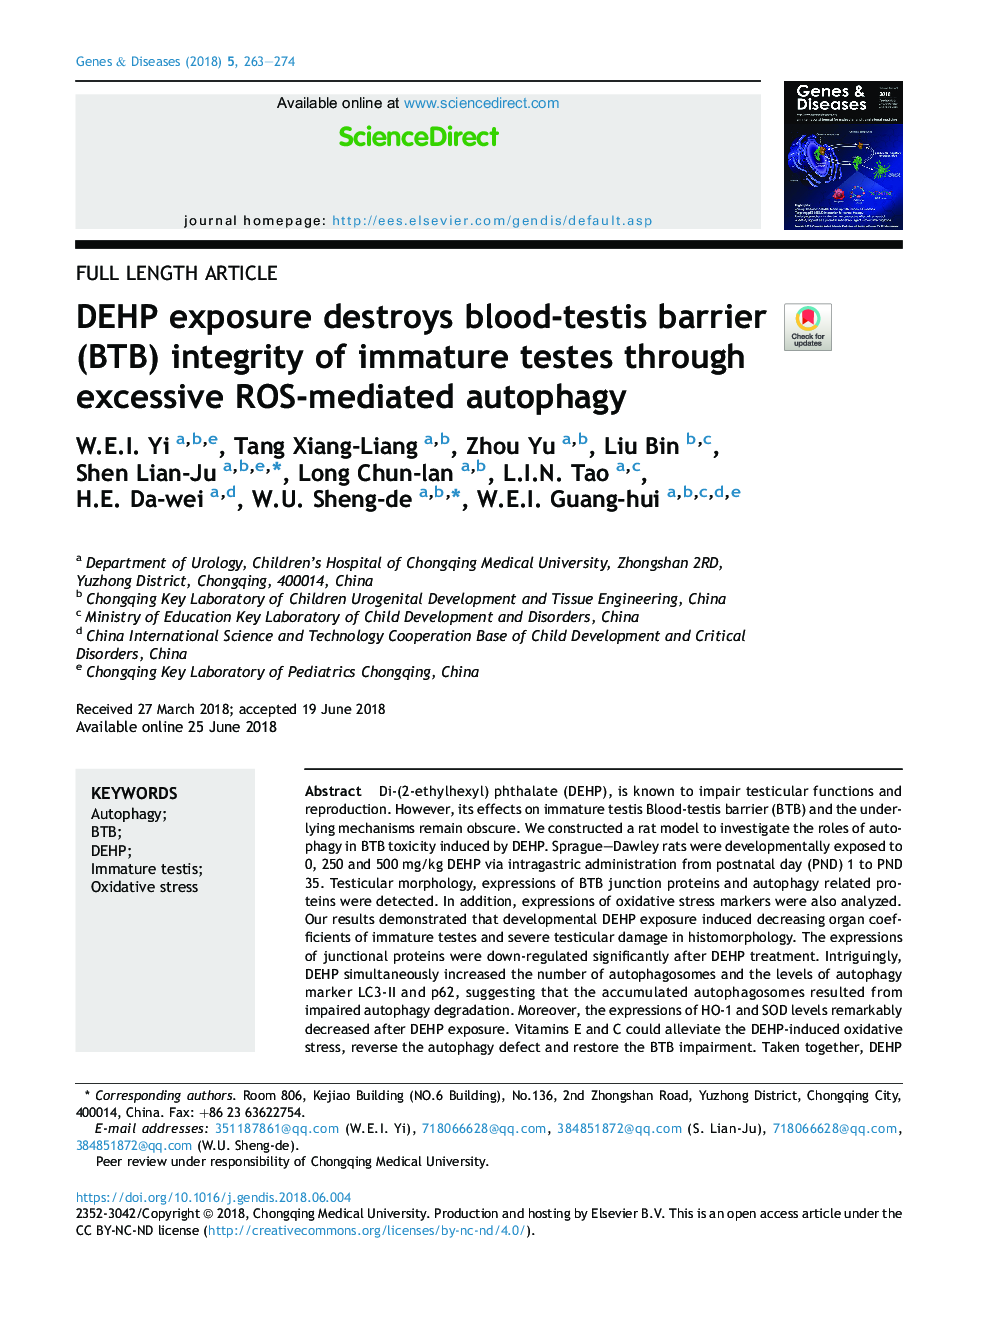 DEHP exposure destroys blood-testis barrier (BTB) integrity of immature testes through excessive ROS-mediated autophagy